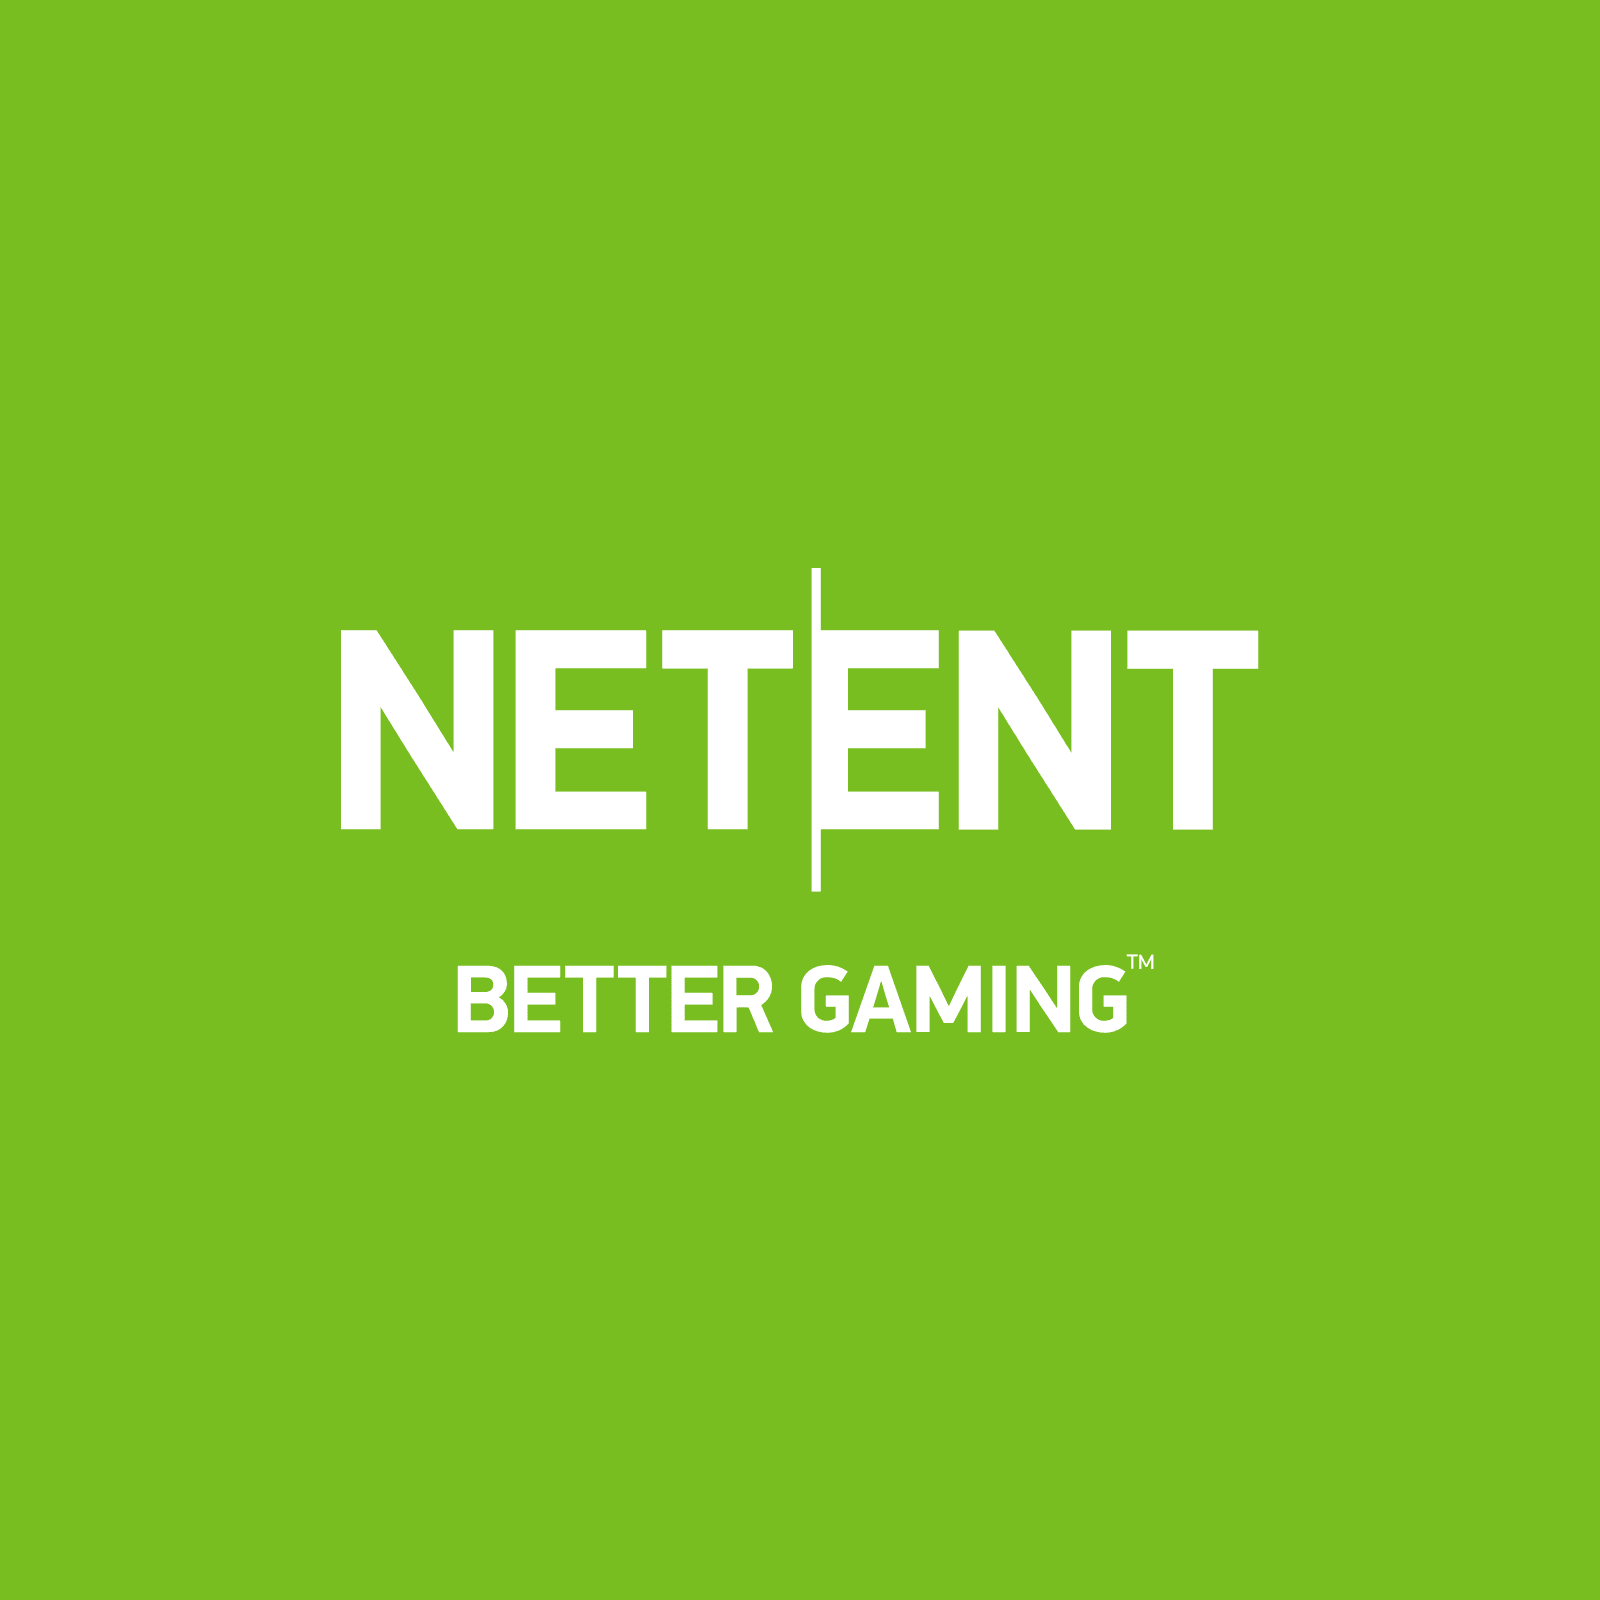 netent-logo-green